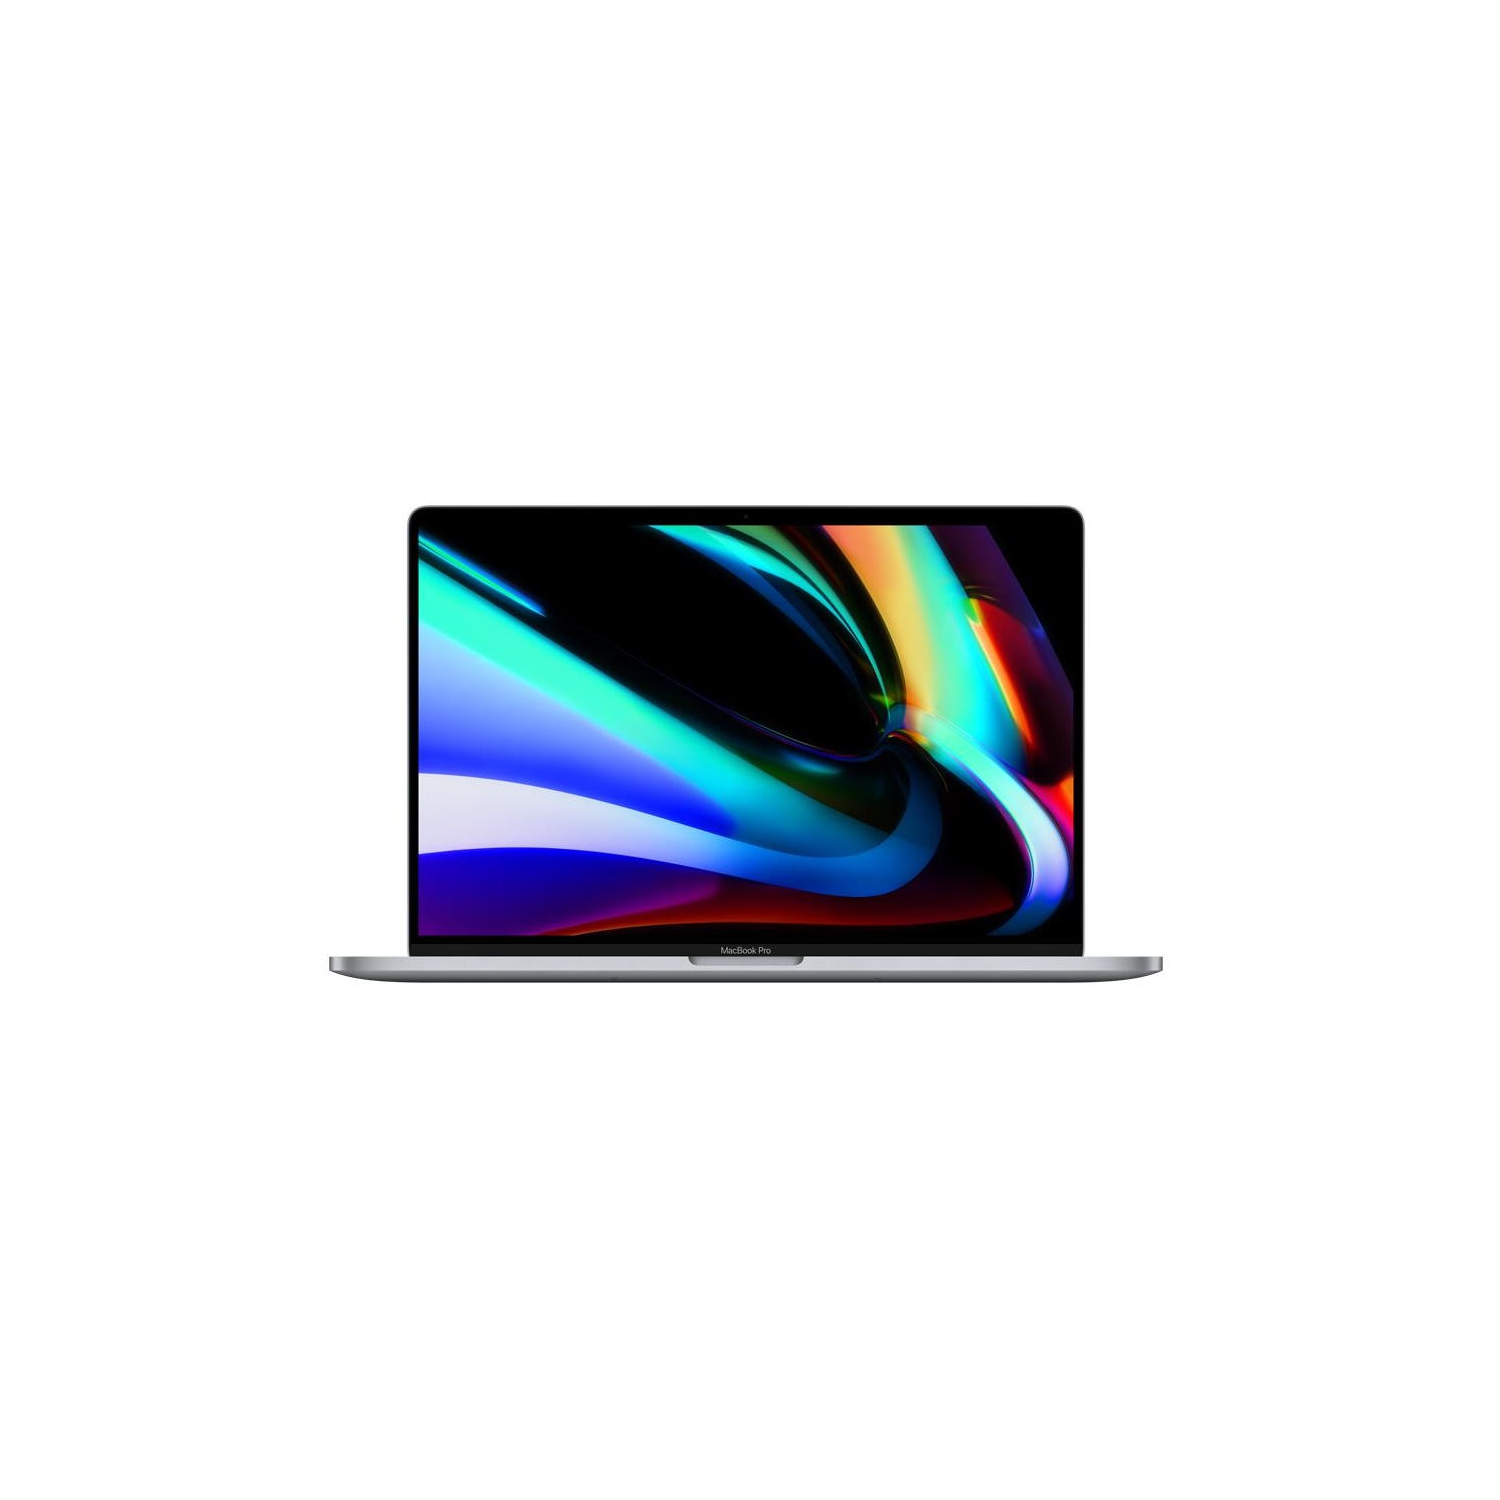 Refurbished - Good) Macbook Pro 16-inch (Space Gray, 1yr Warranty